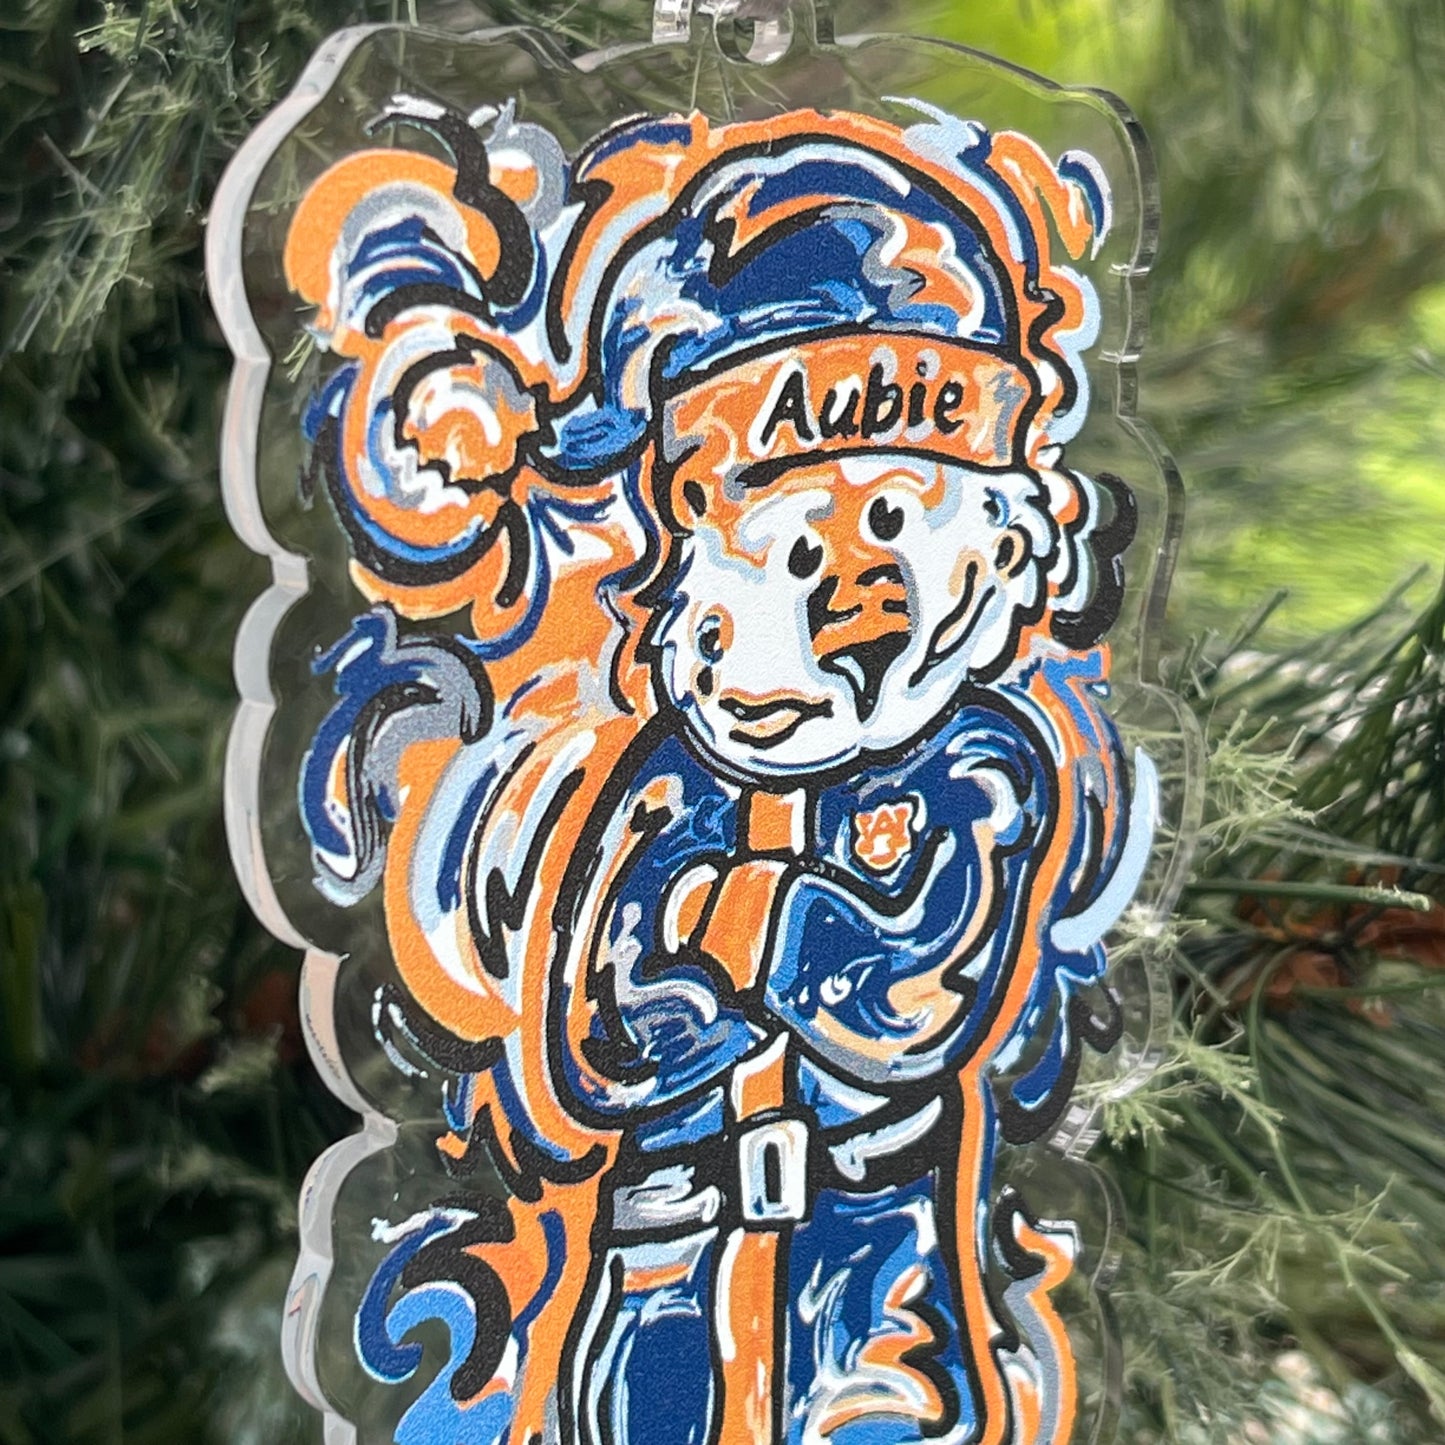 Auburn University Aubie Santa Claus Ornament by Justin Patten (2 Styles)